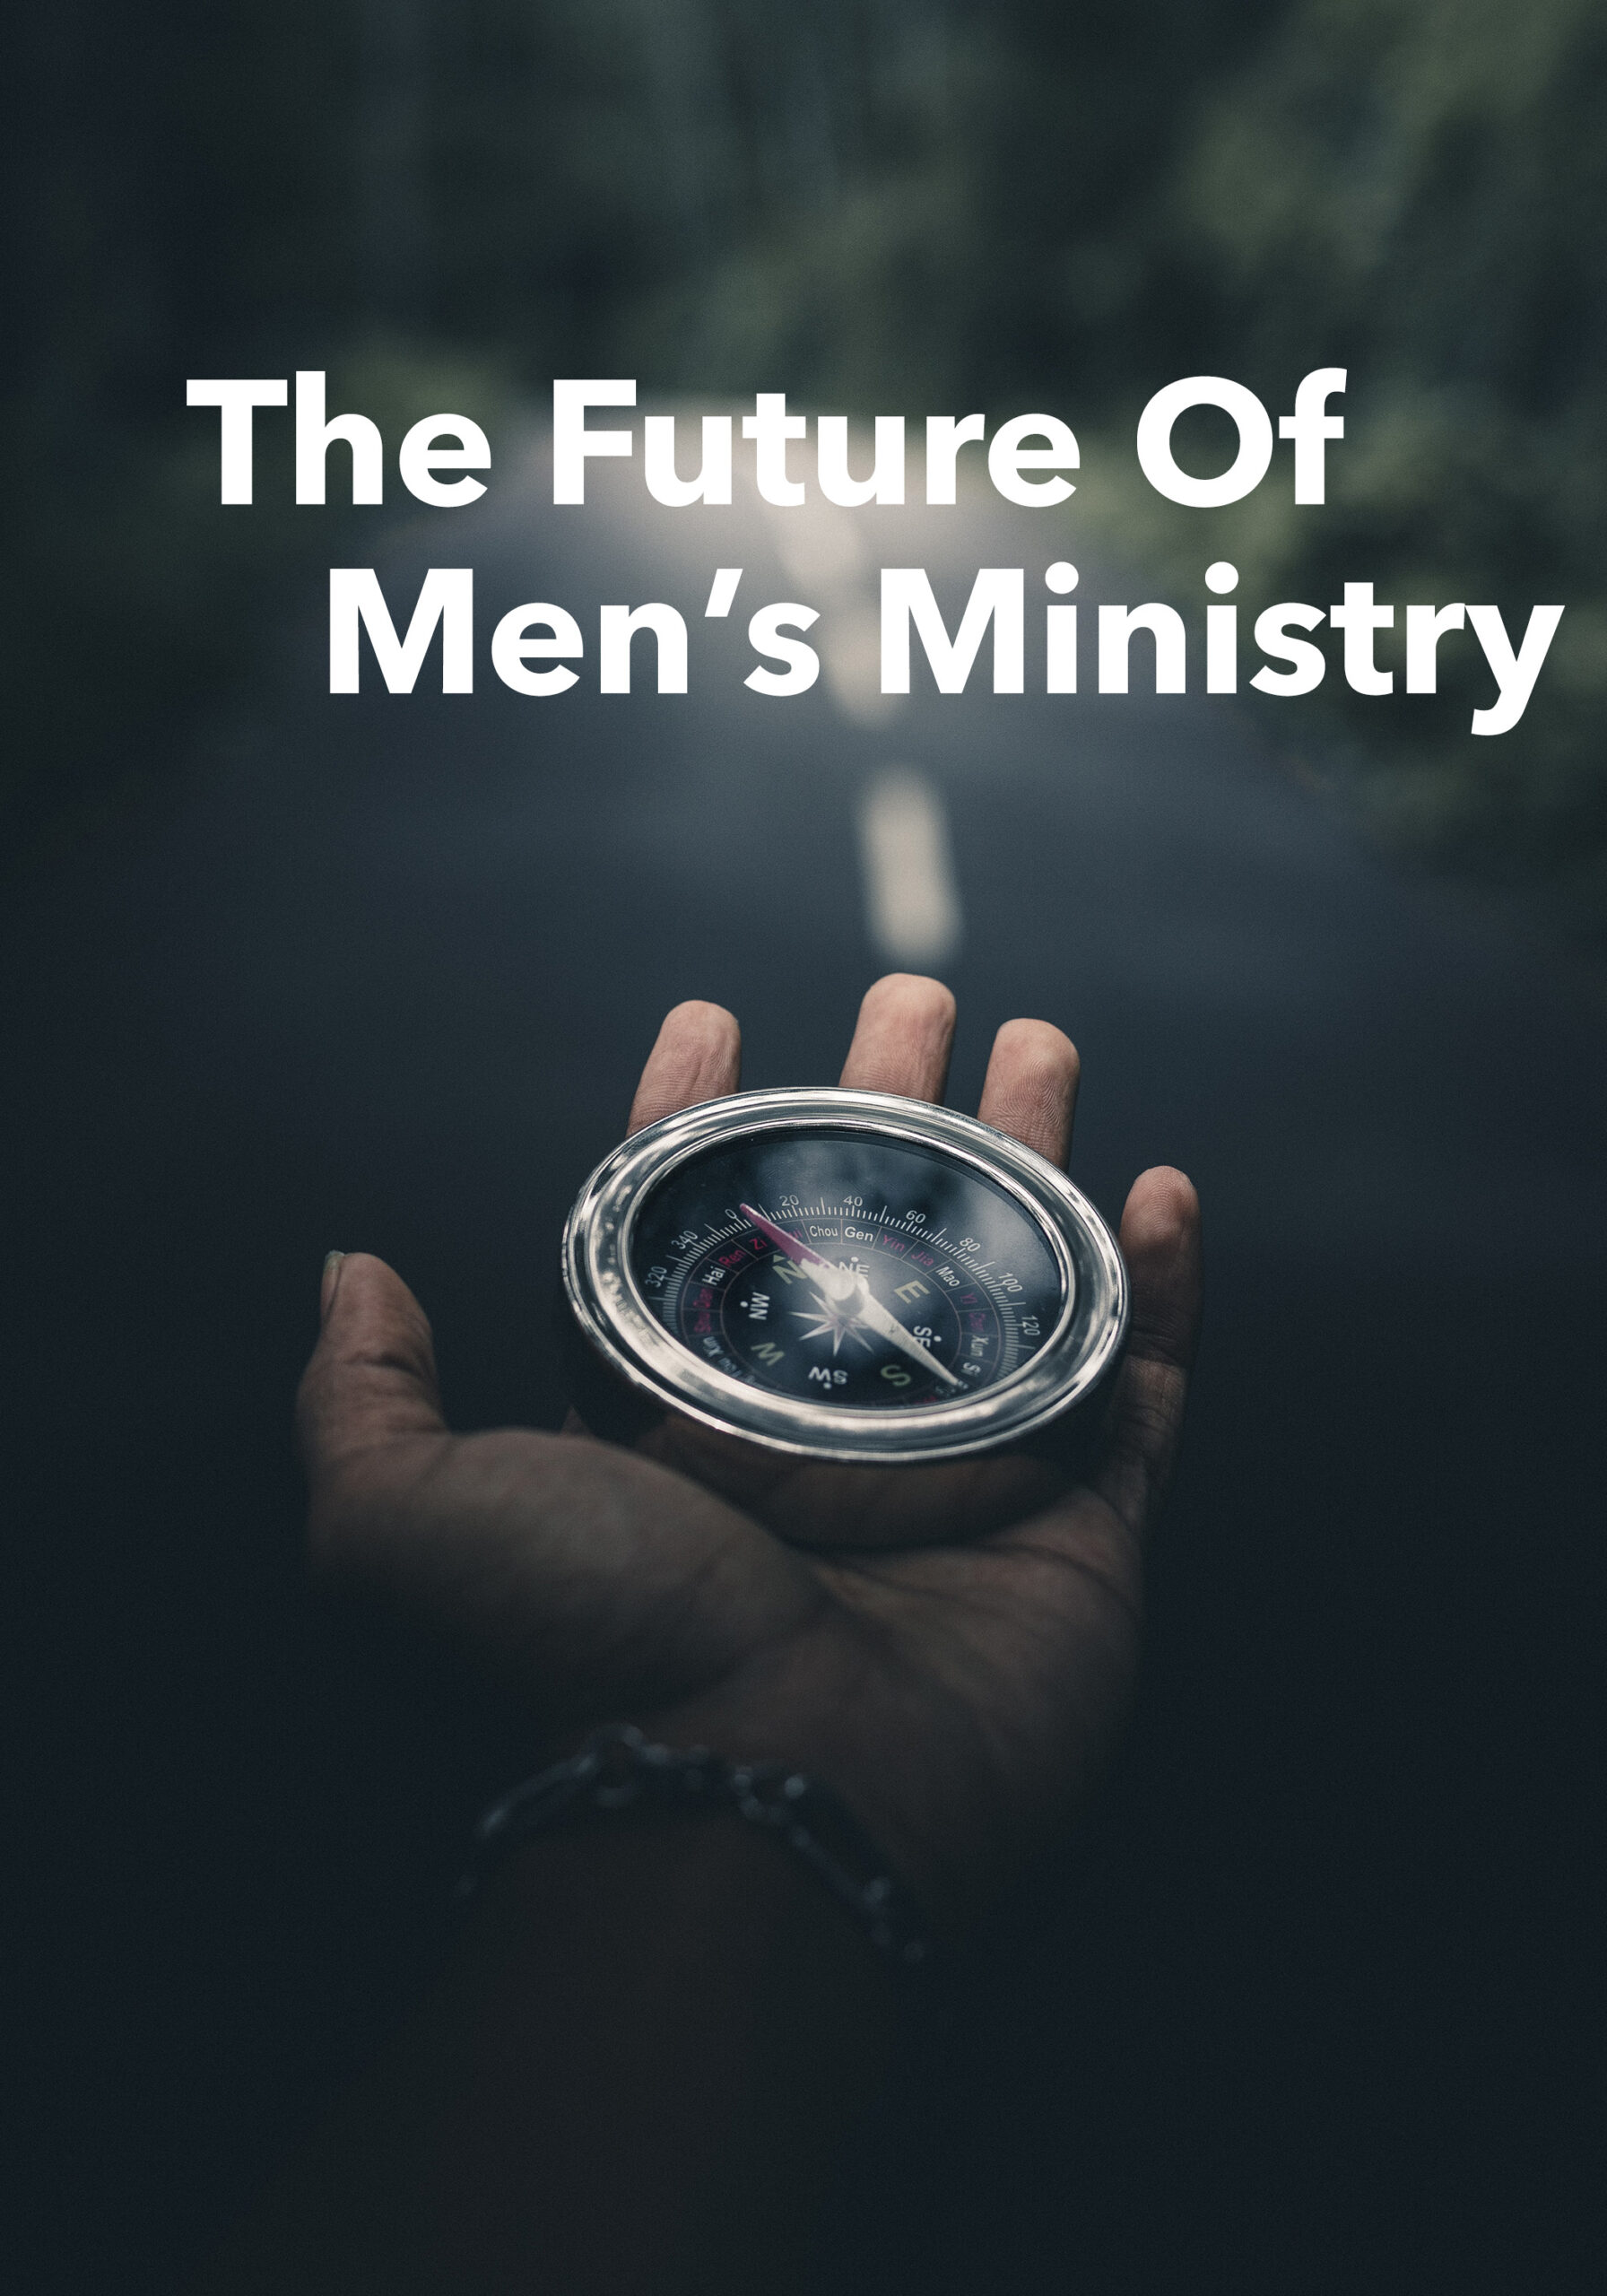 Men's Ministry Strategies